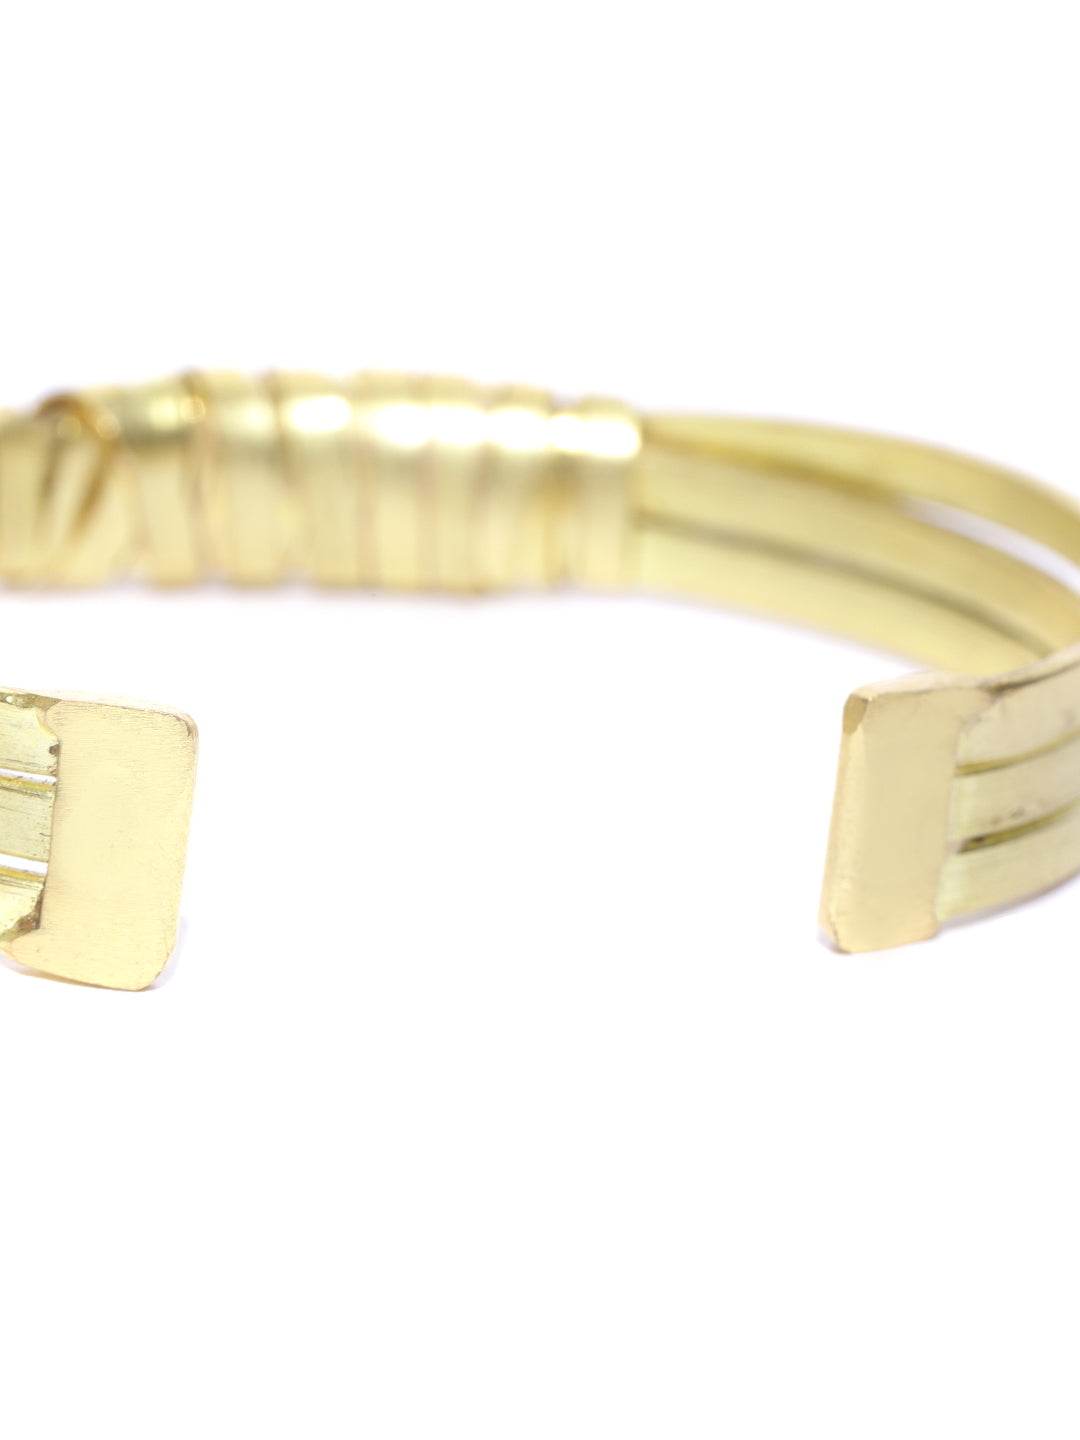 Blueberry gold plated cuff bracelet